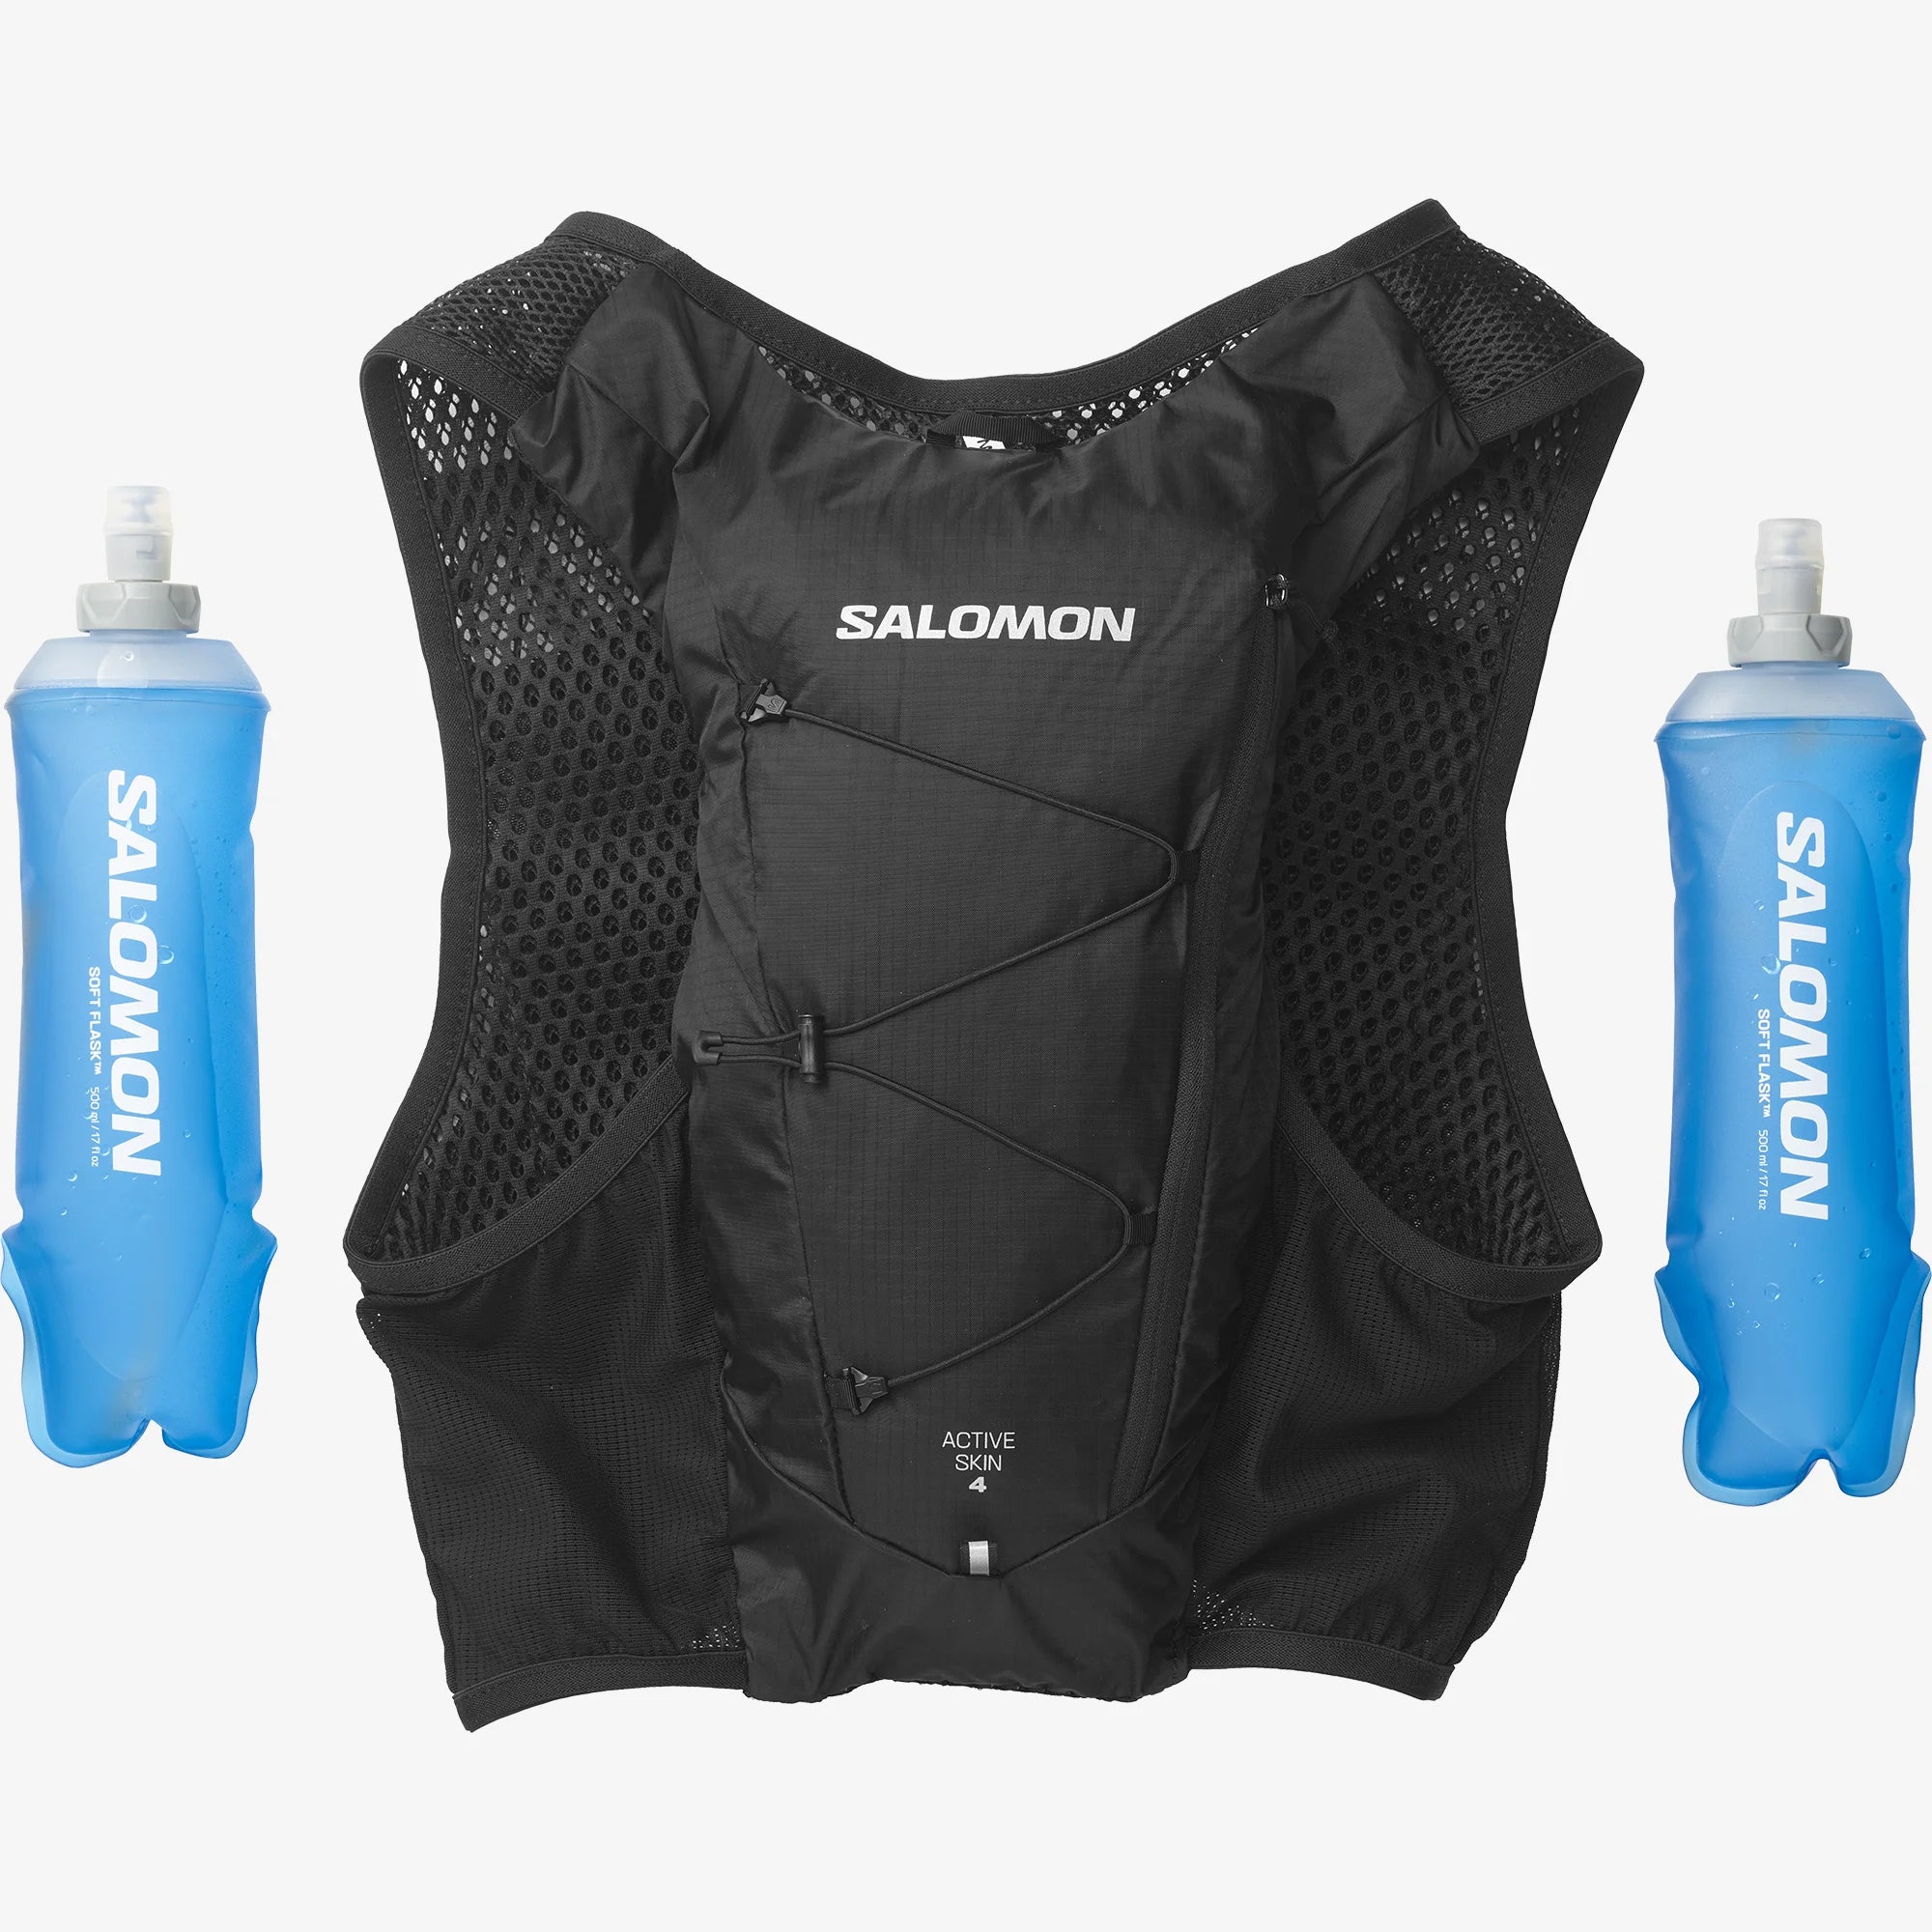 Salomon Active Skin 4 Hydration Pack + Flasks Black Unisex